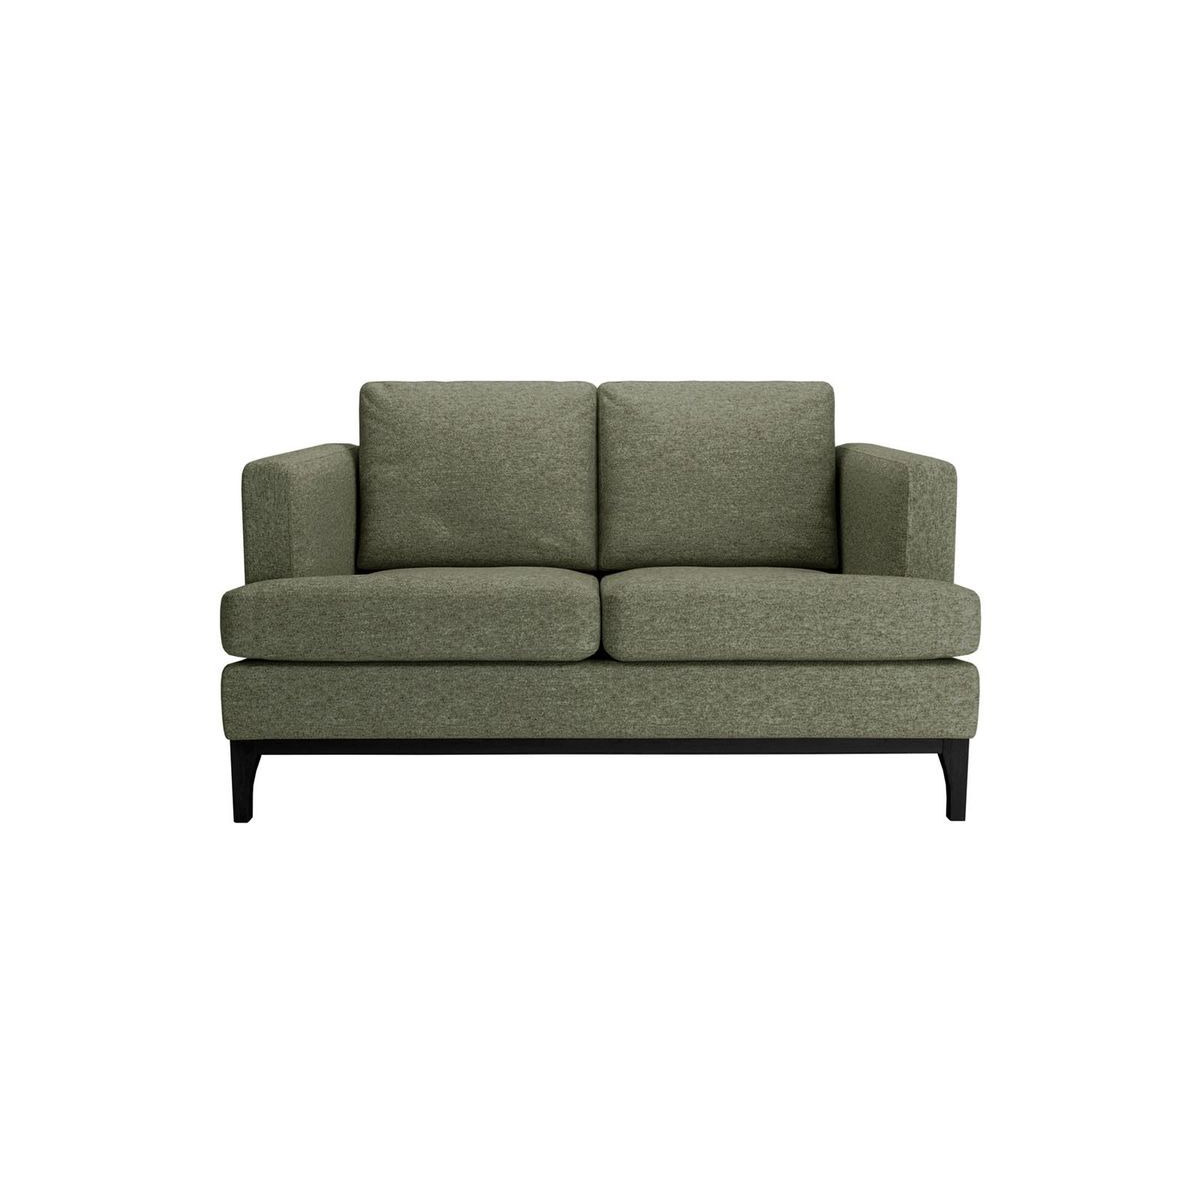 Scarlett 2 Seater Sofa, dark green, Leg colour: black - image 1